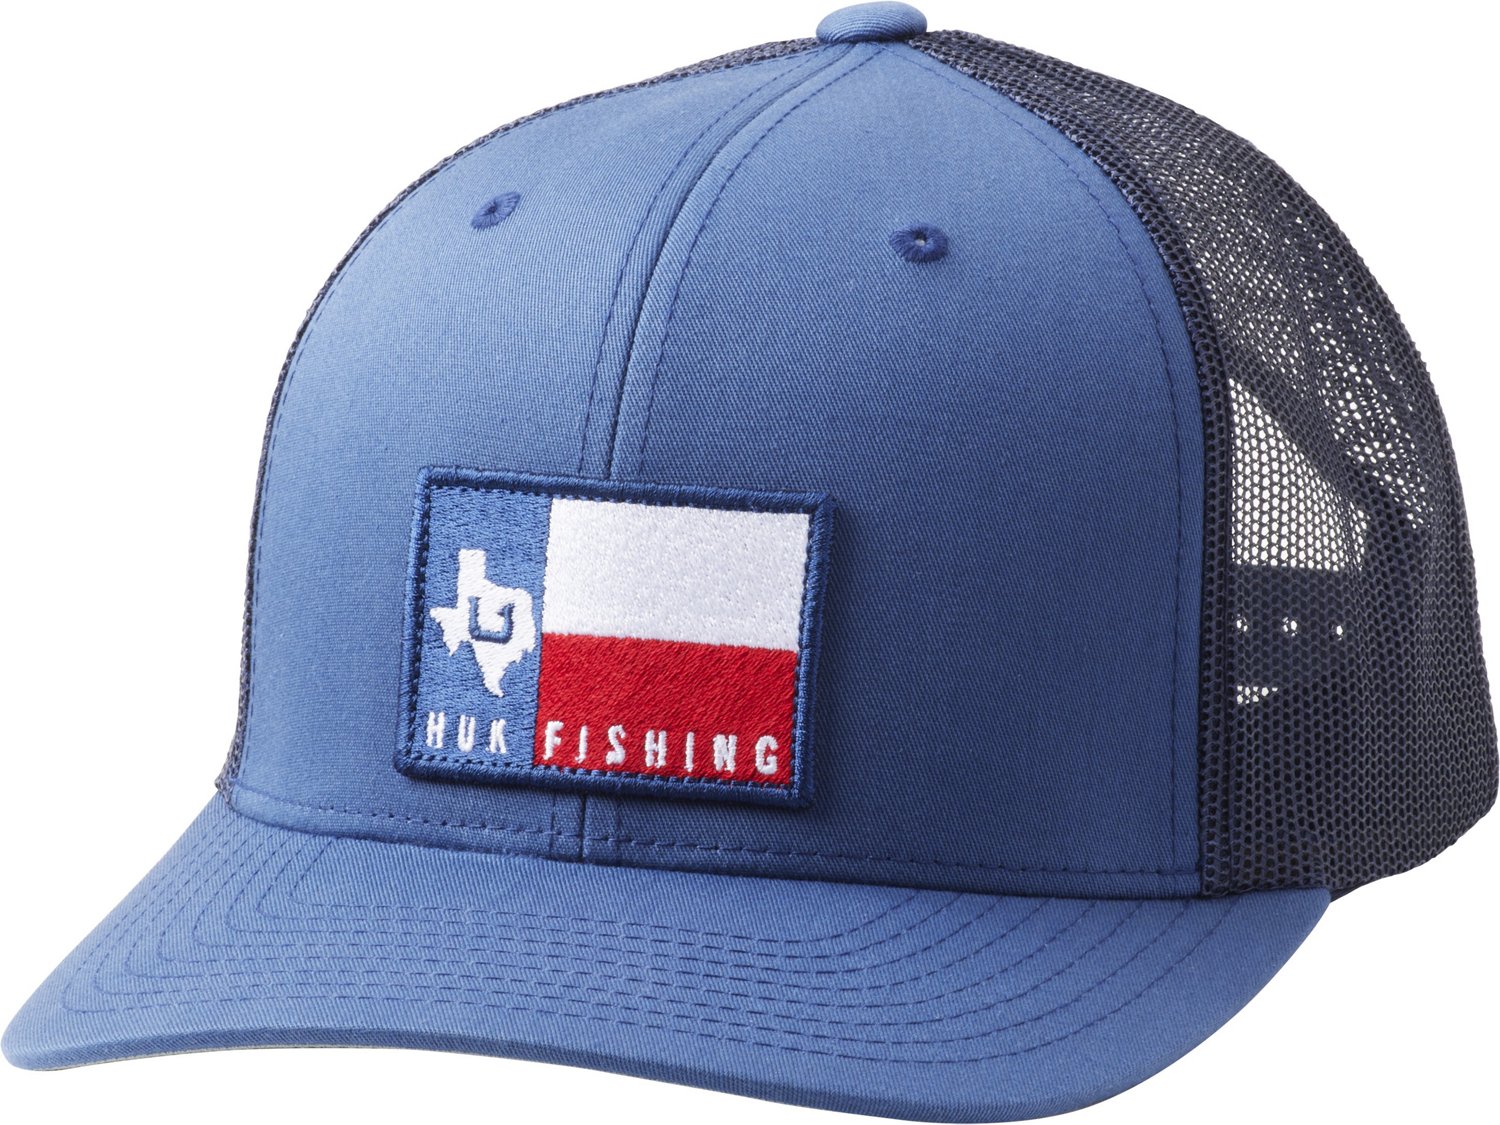 Dick's Sporting Goods Huk Men's Captain Rope Trucker Hat